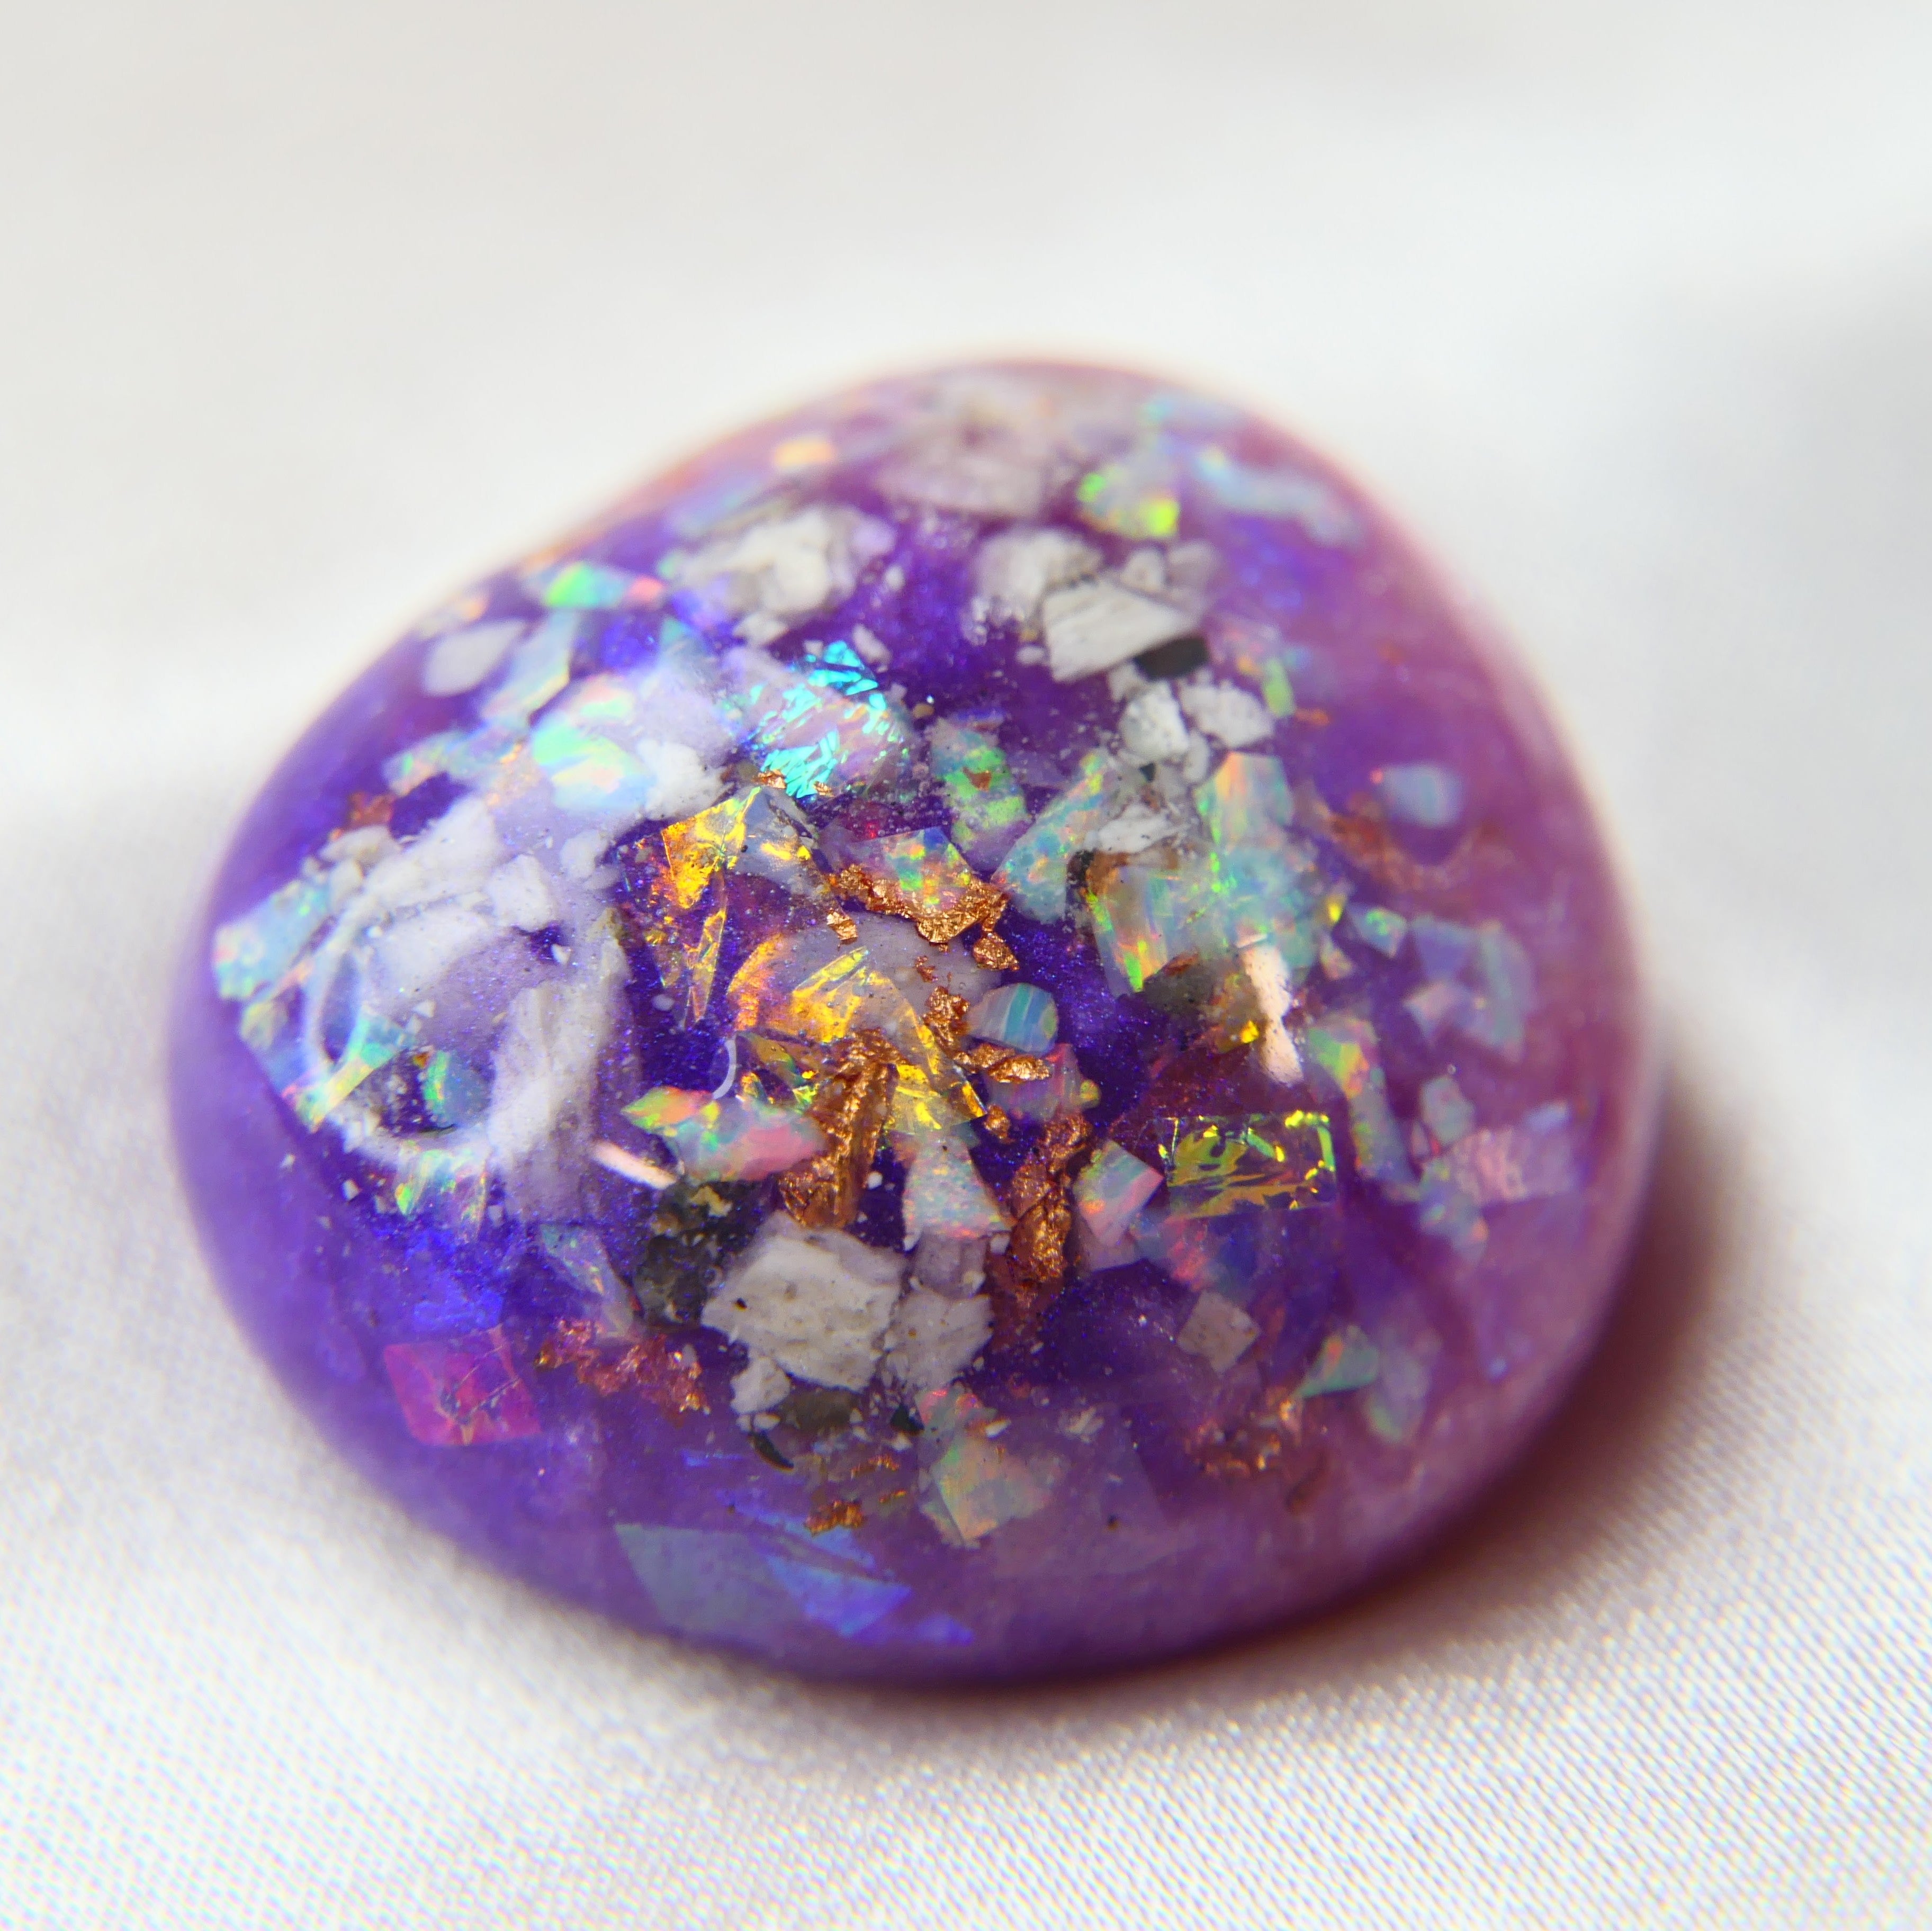 Keepsake stone- violet shimmer, ashes, gold flecks and cornw flower blue opal with opalescent flecks